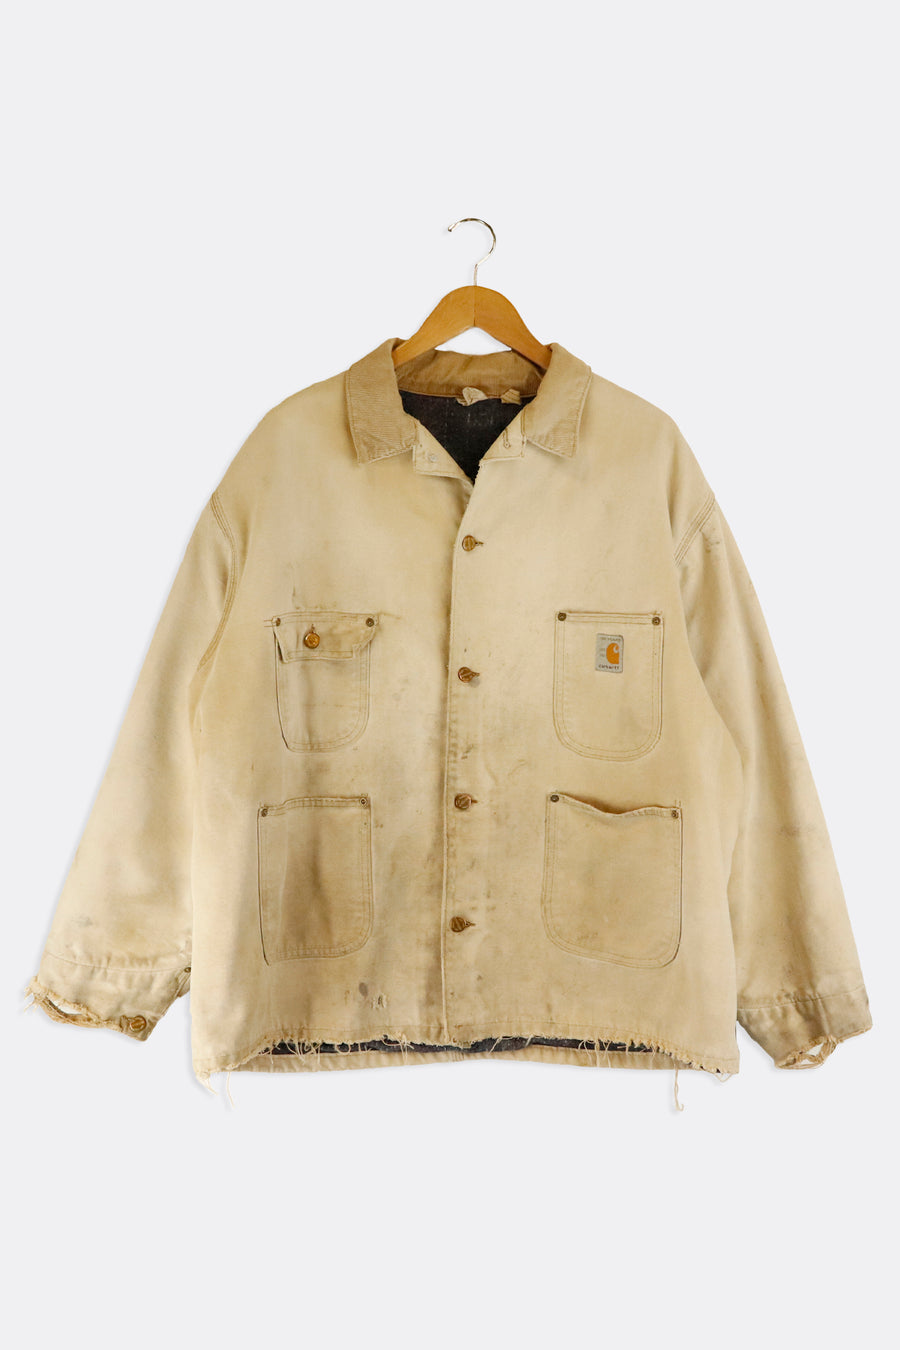 Vintage 1989 Carhartt Chore Sun Bleached Cream Collared Jacket Sz XL